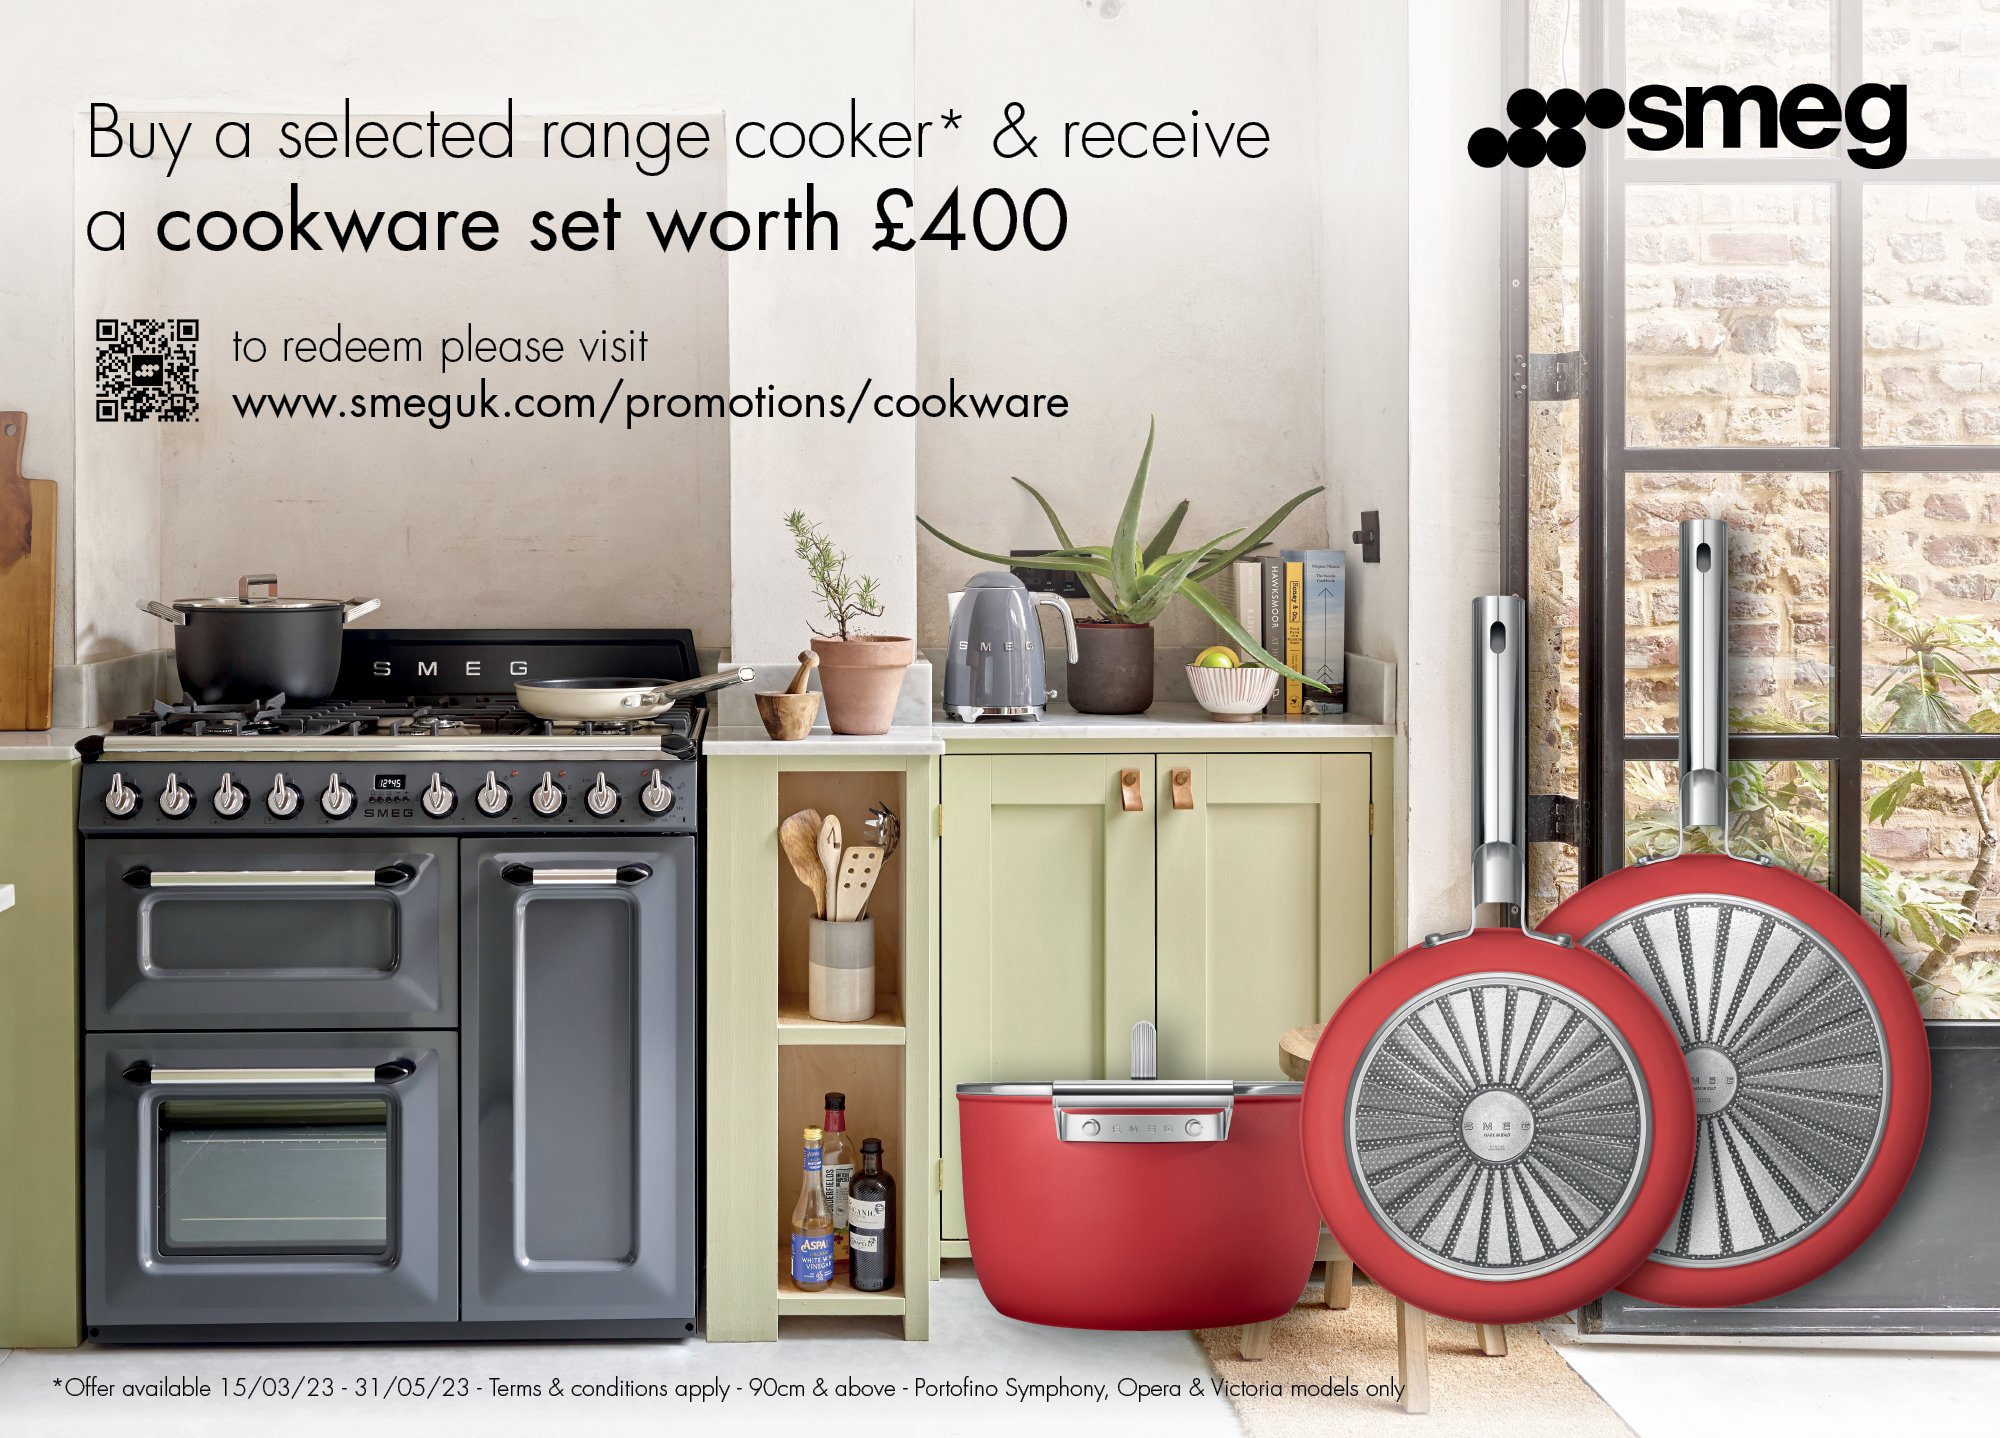 Smeg Cookware worth £400 on selected Smeg Rangecookers